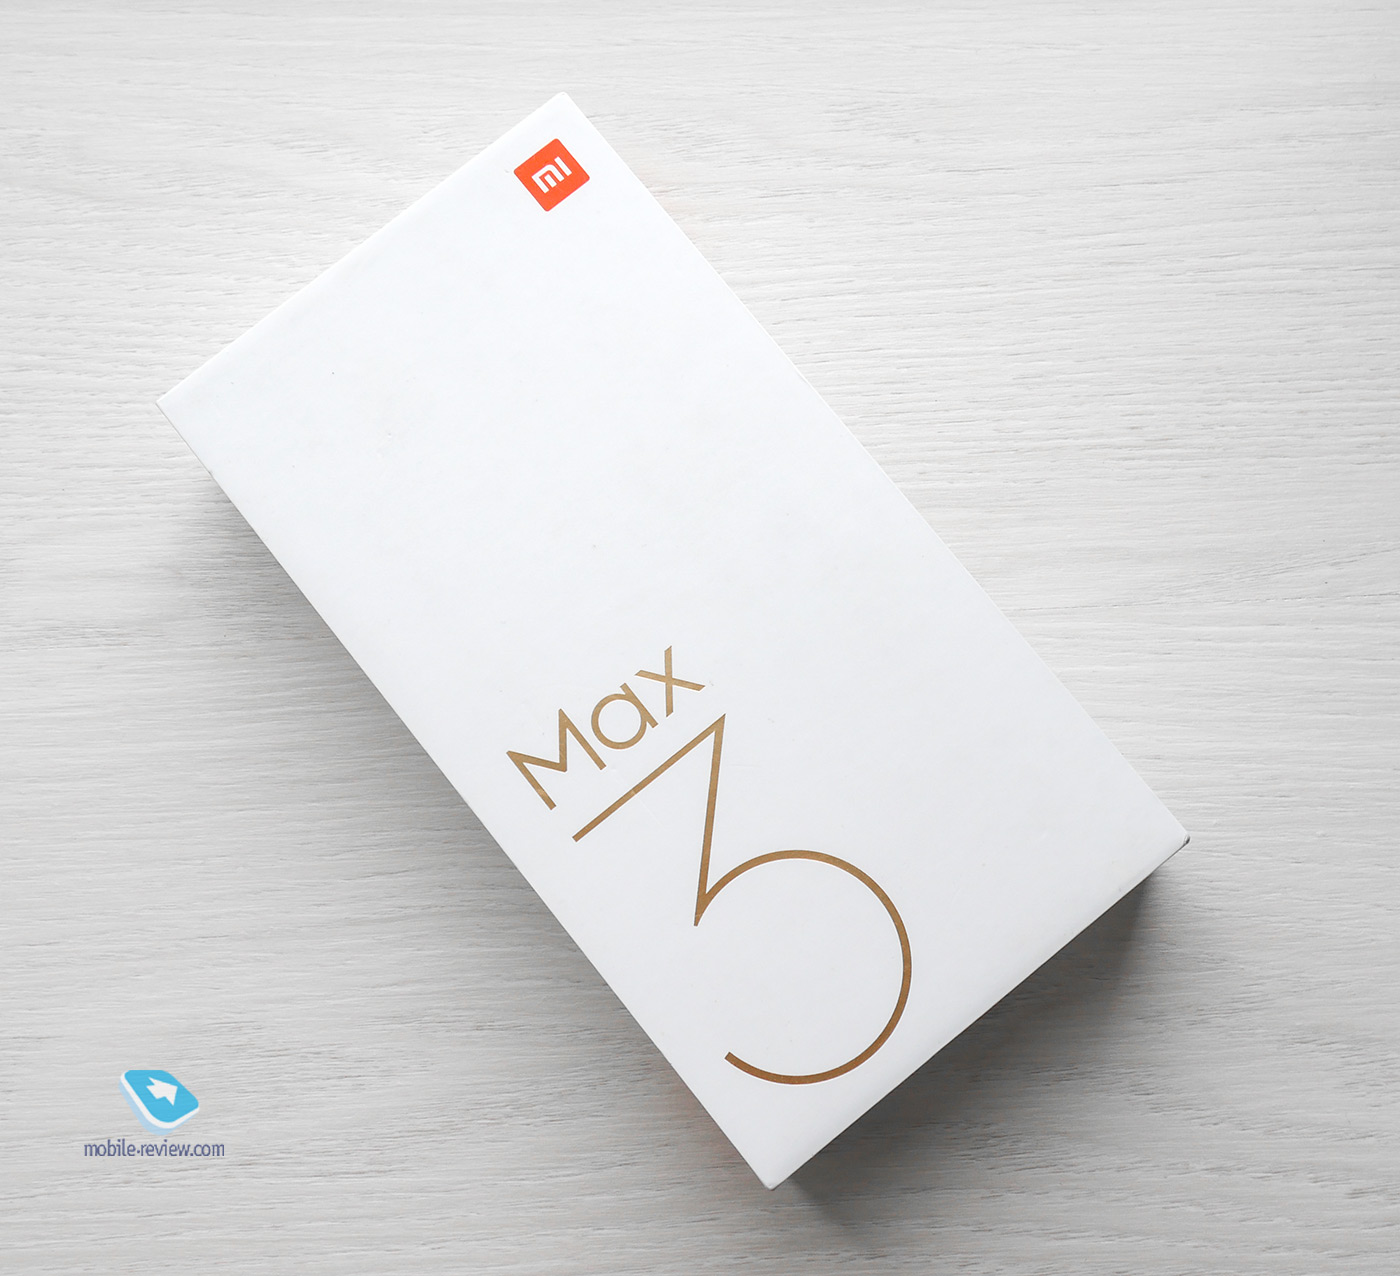 Обзор смартфона Xiaomi Mi Max 3